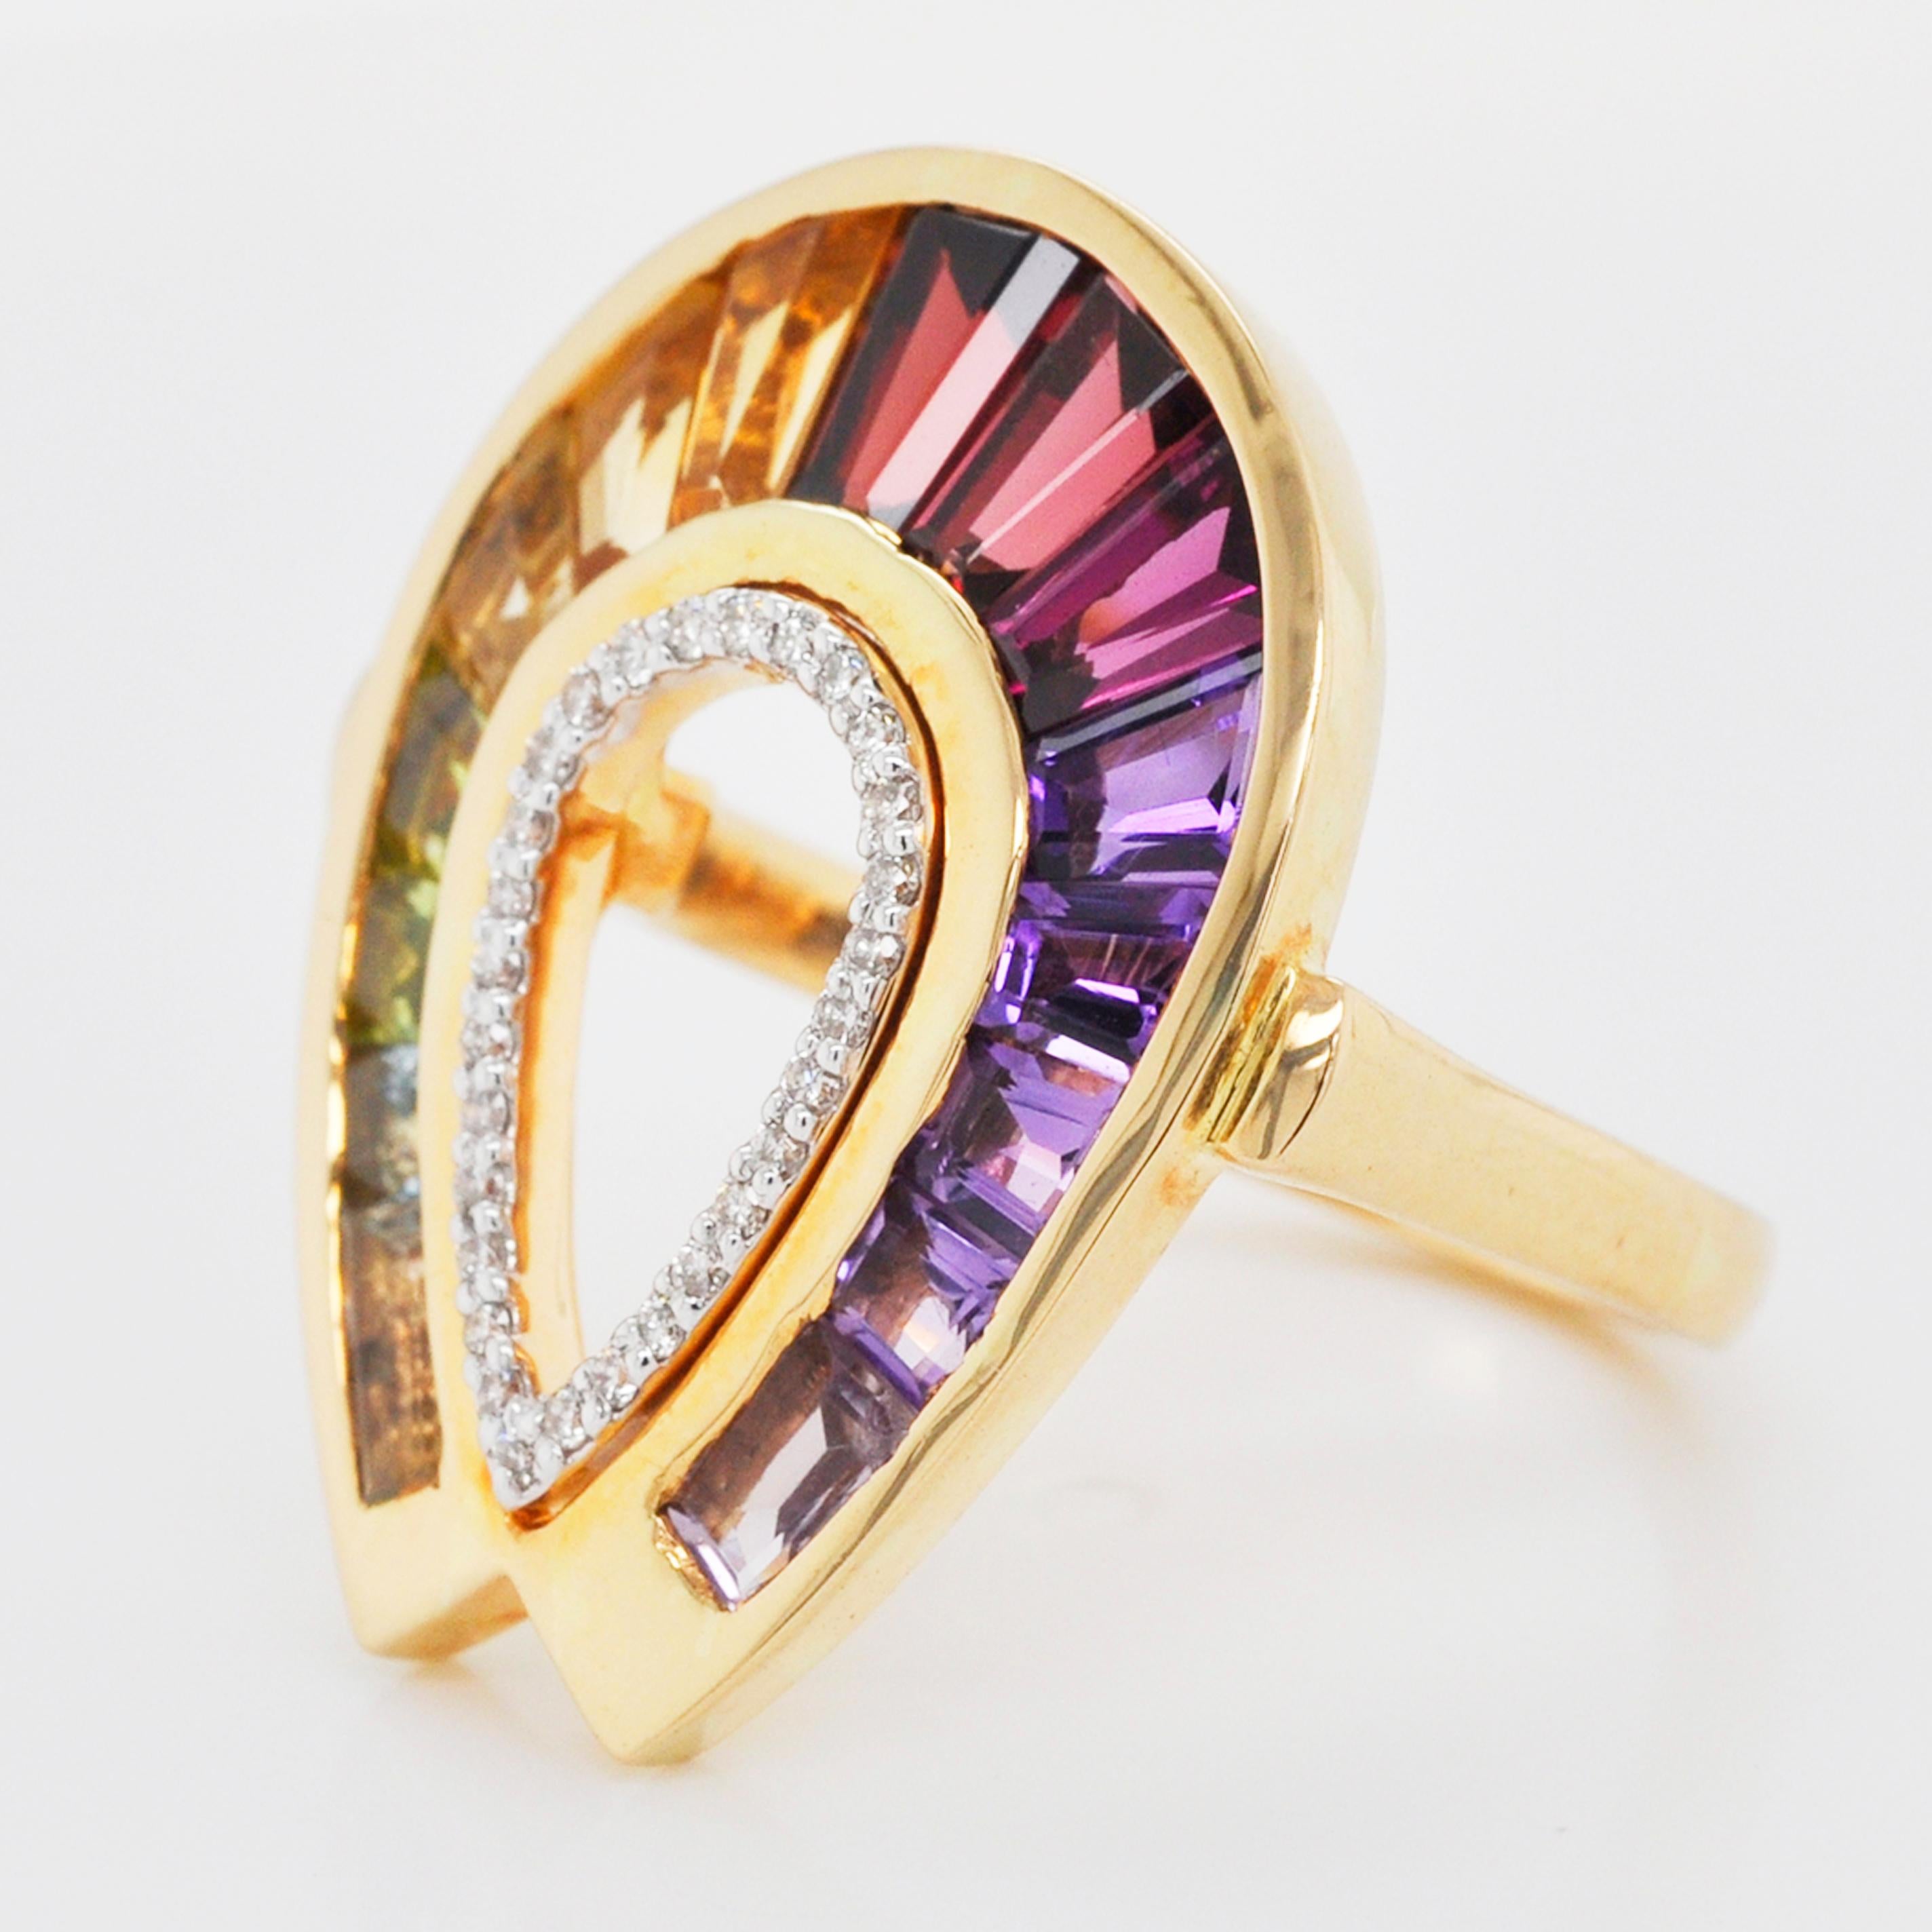 For Sale:  18 Karat Gold Channel Set Baguette Rainbow Gemstones Doorknocker Diamond Ring 11